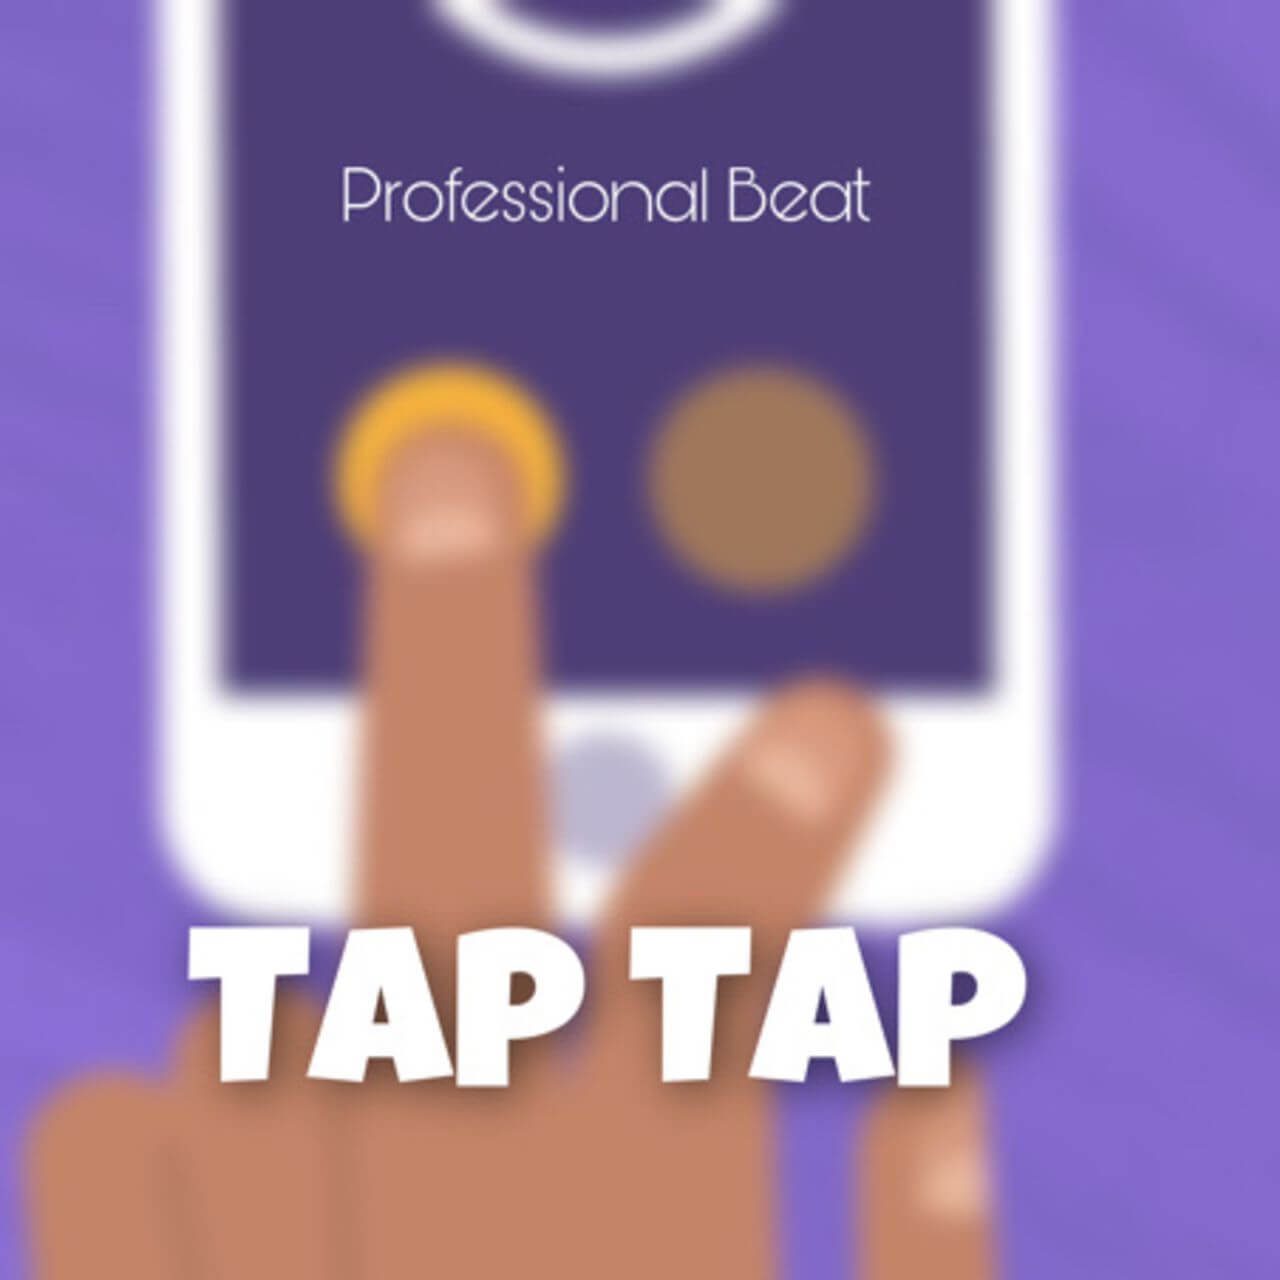 Professional Beat - Tap Tap